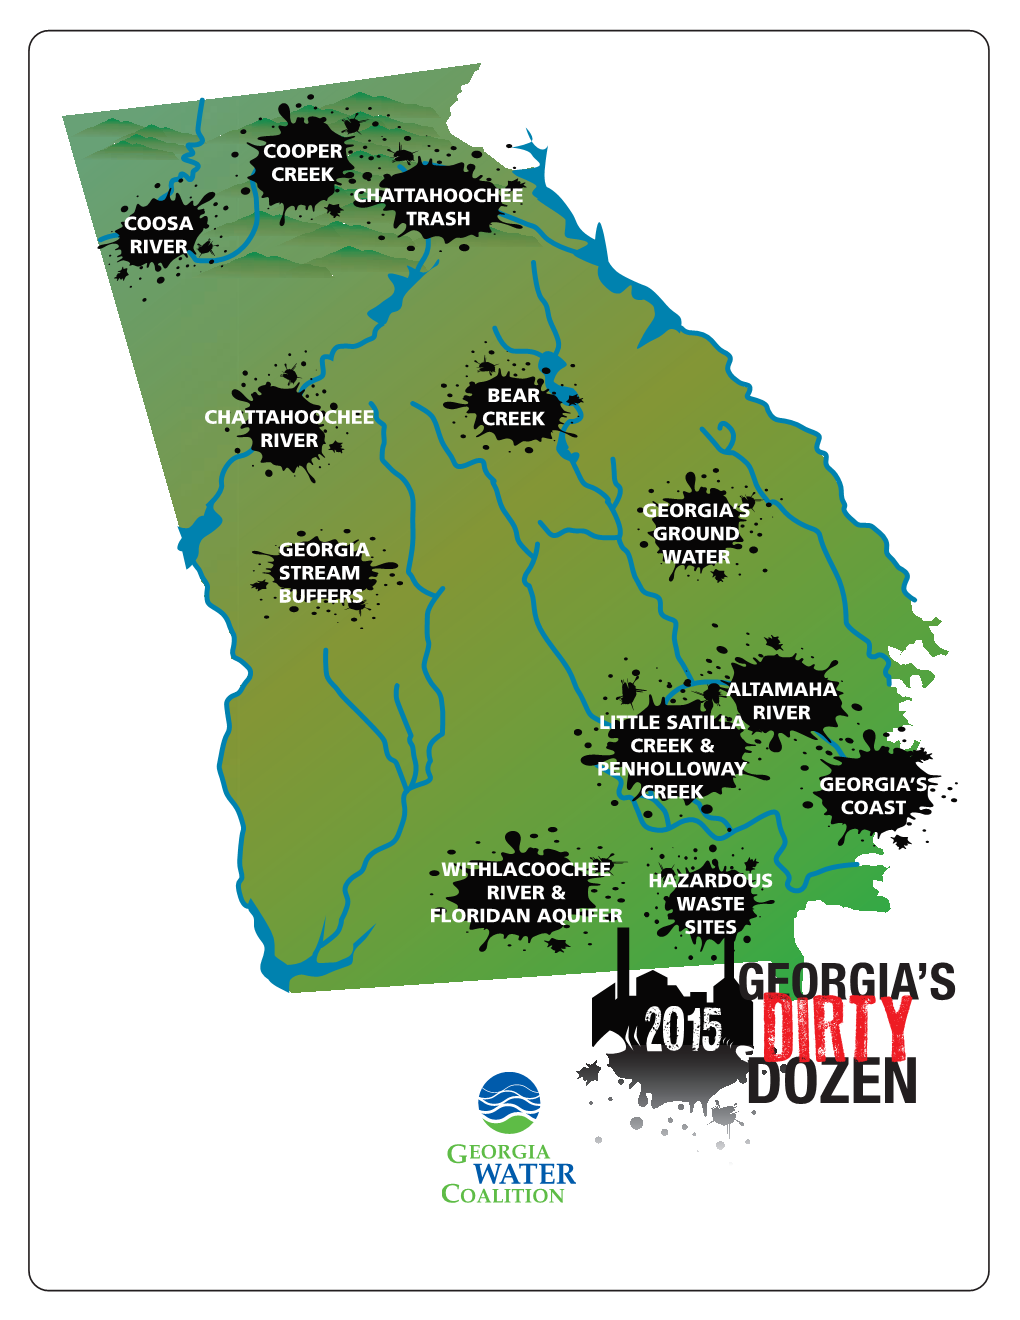 Coosa River Georgia Stream Buffers Withlacoochee